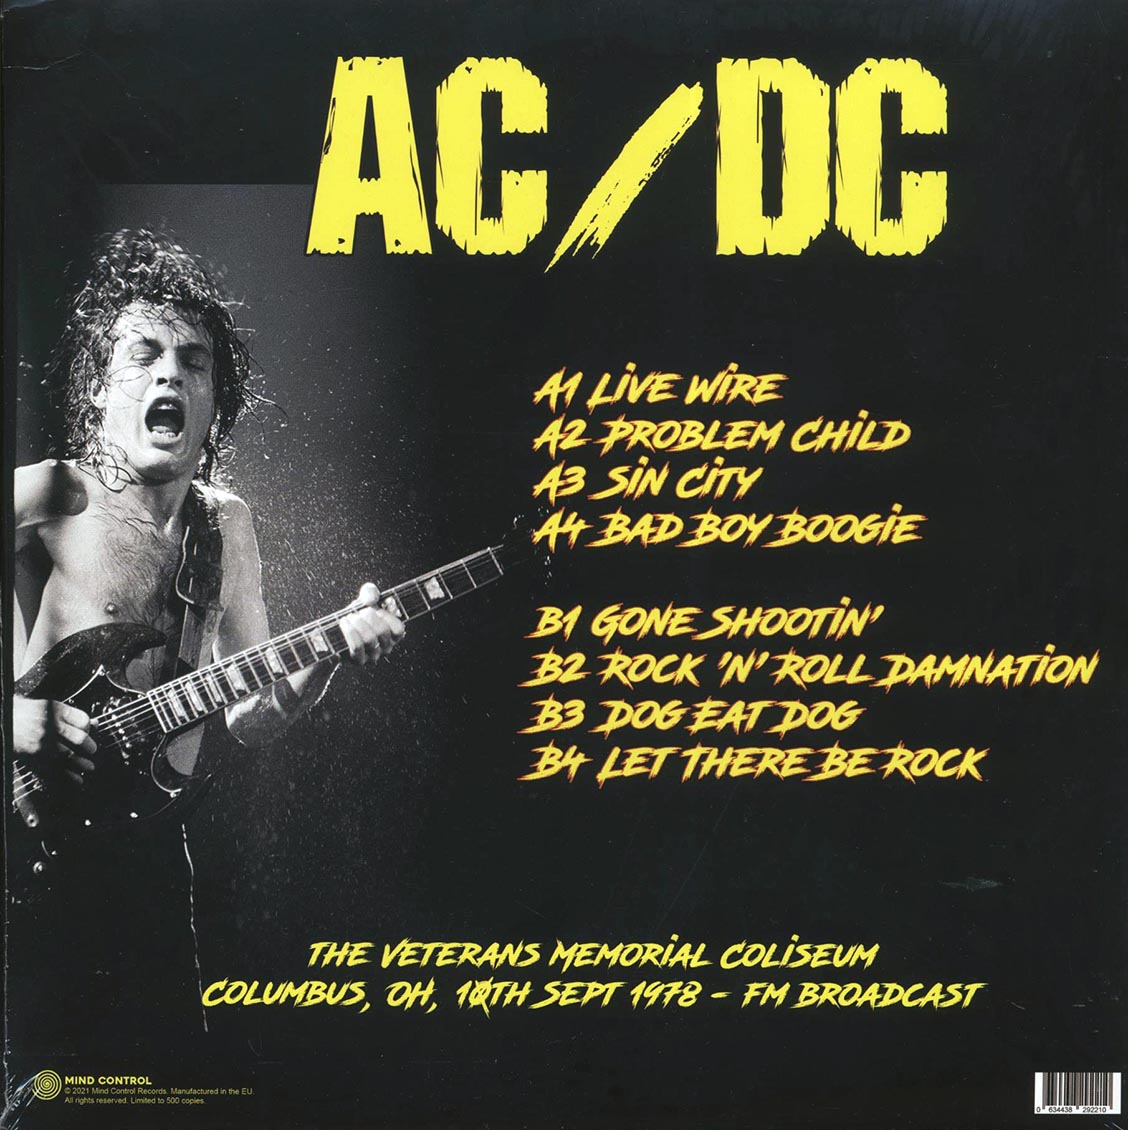 AC/DC - The Veterans Memorial Coliseum, Columbus, OH, 10th Sept 1978 FM Broadcast (ltd. 500 copies made) - Vinyl LP, LP